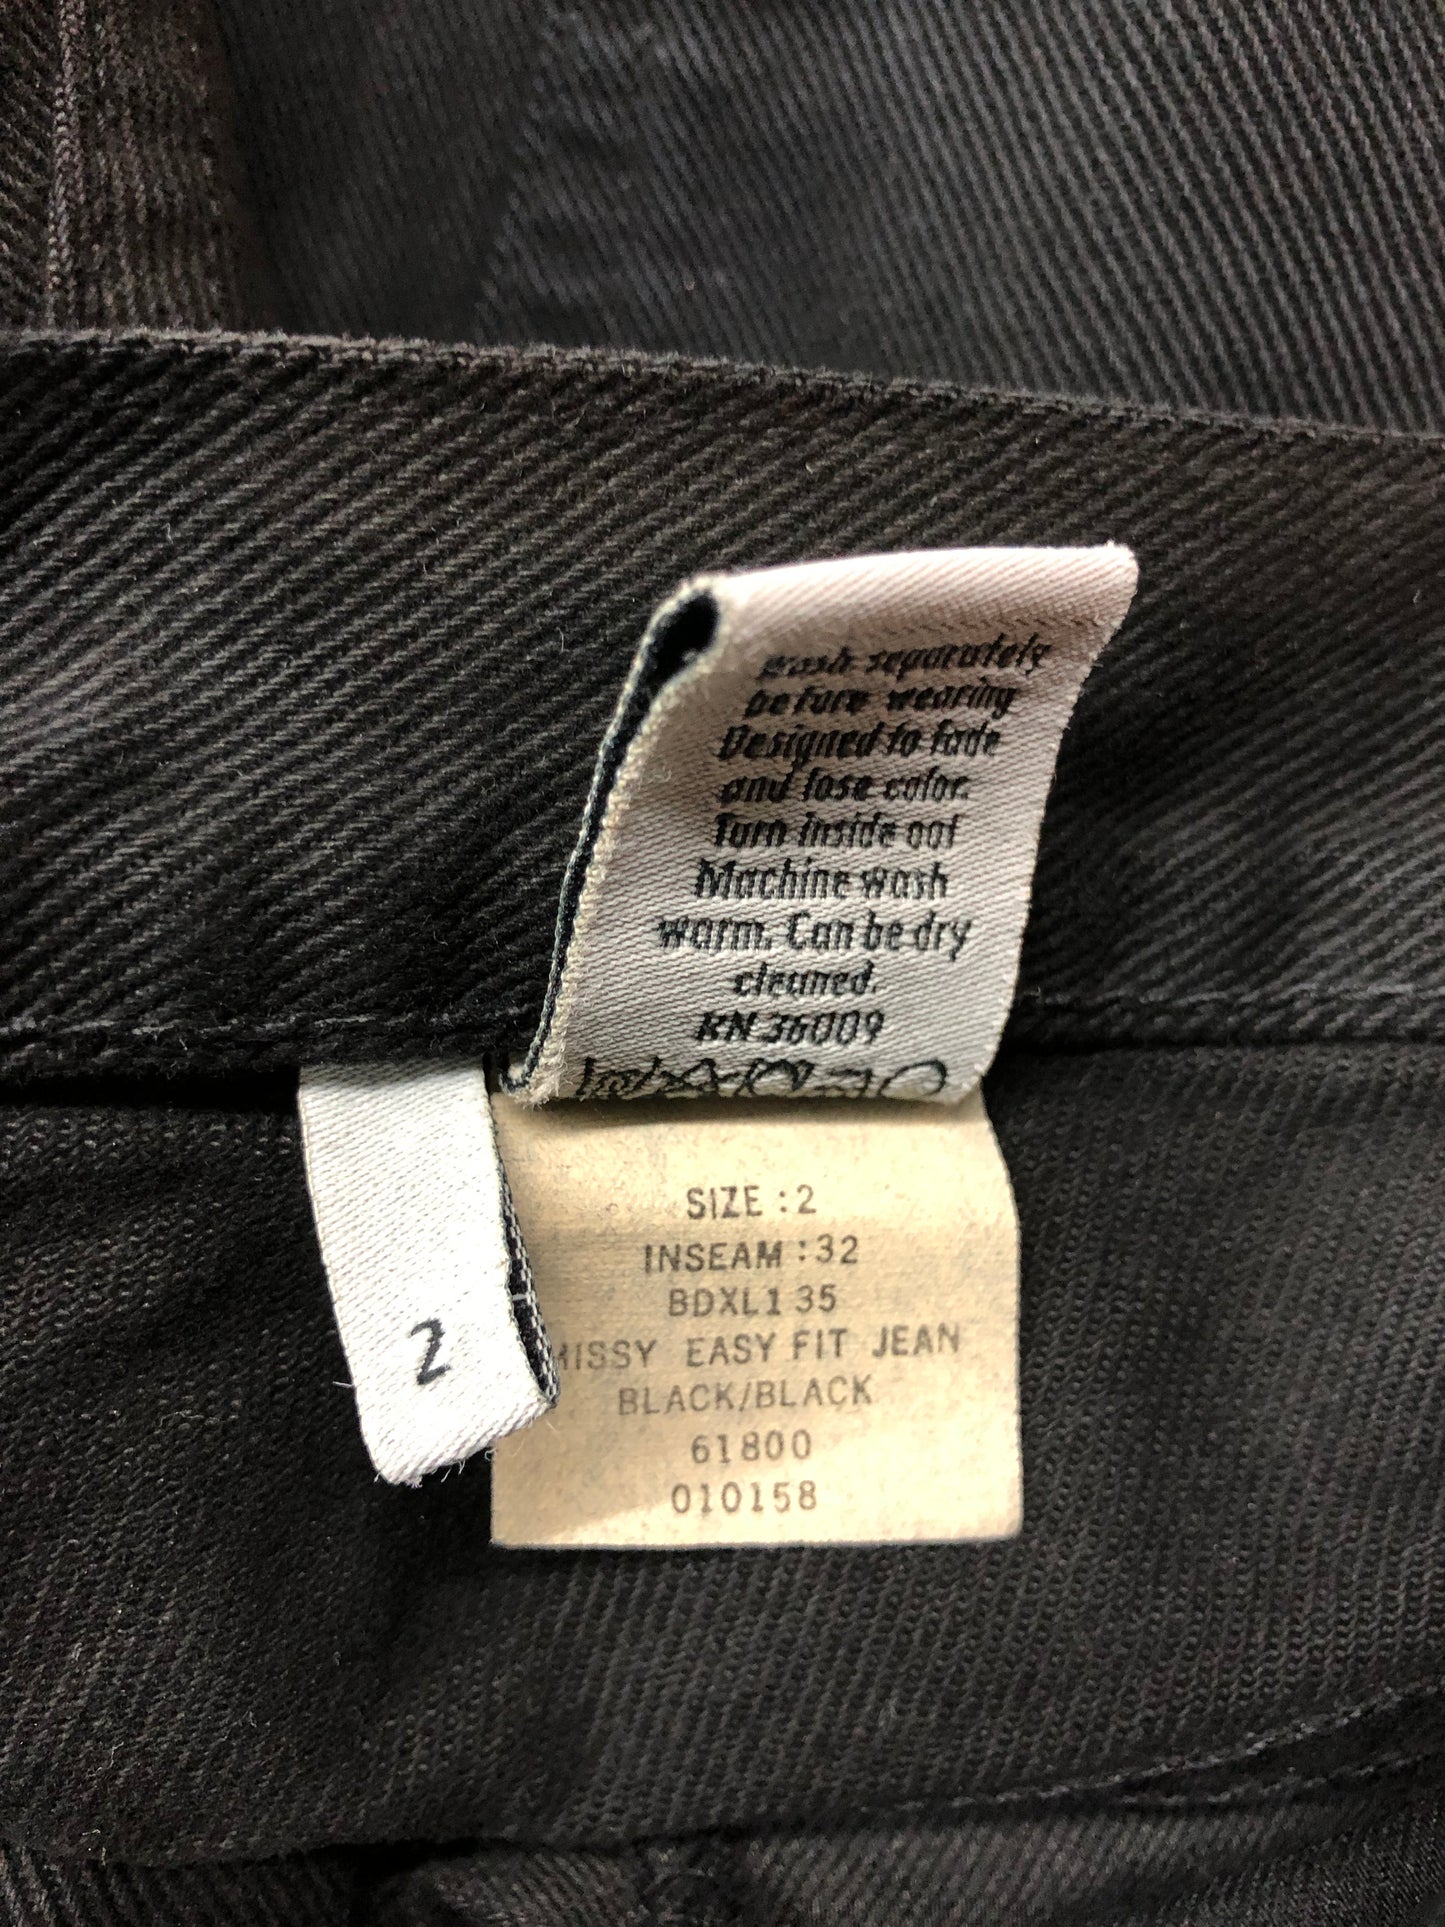 VTG Black Calvin Klein Jeans Sz 26x32